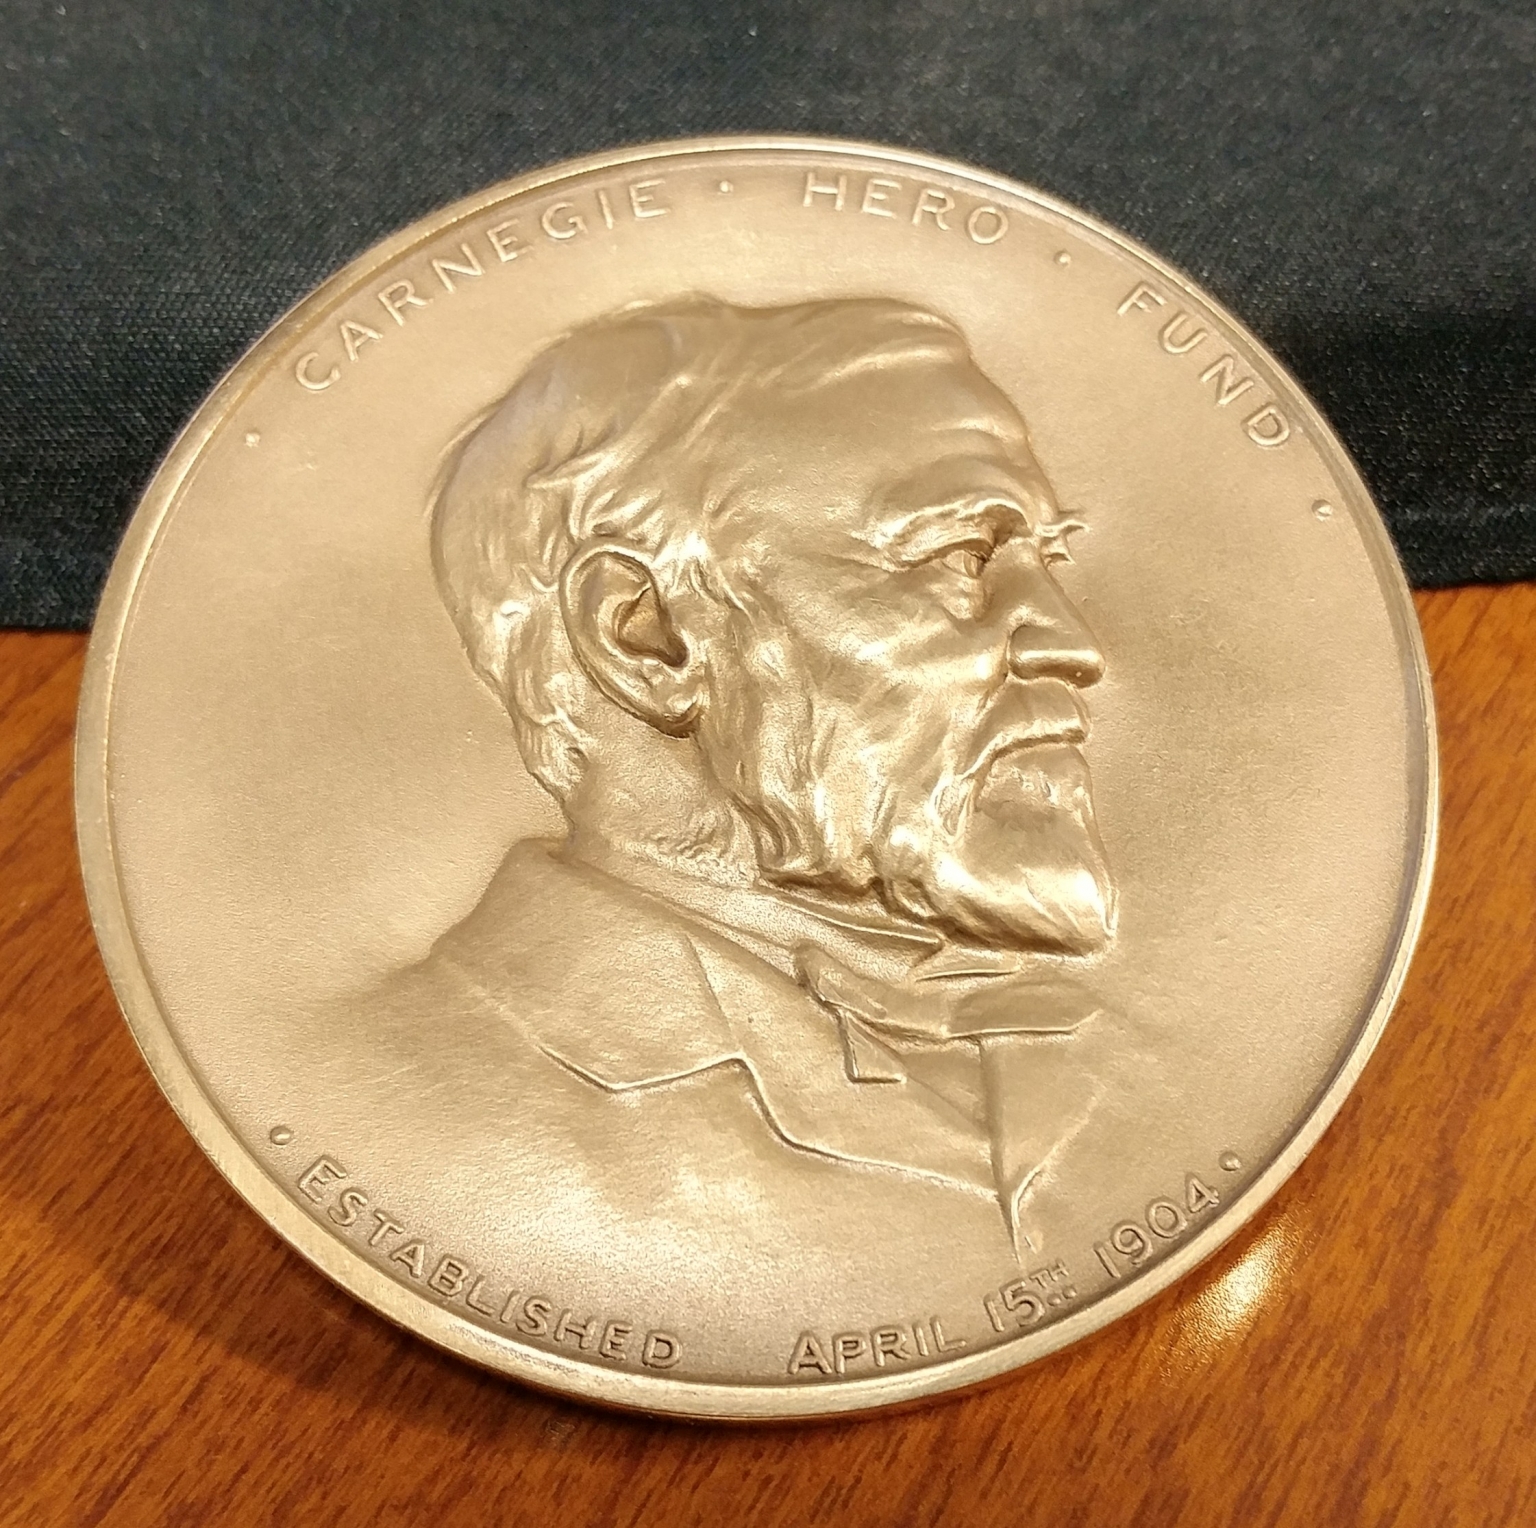 Carnegie Medal Refinishing Carnegie Hero Fund Commission